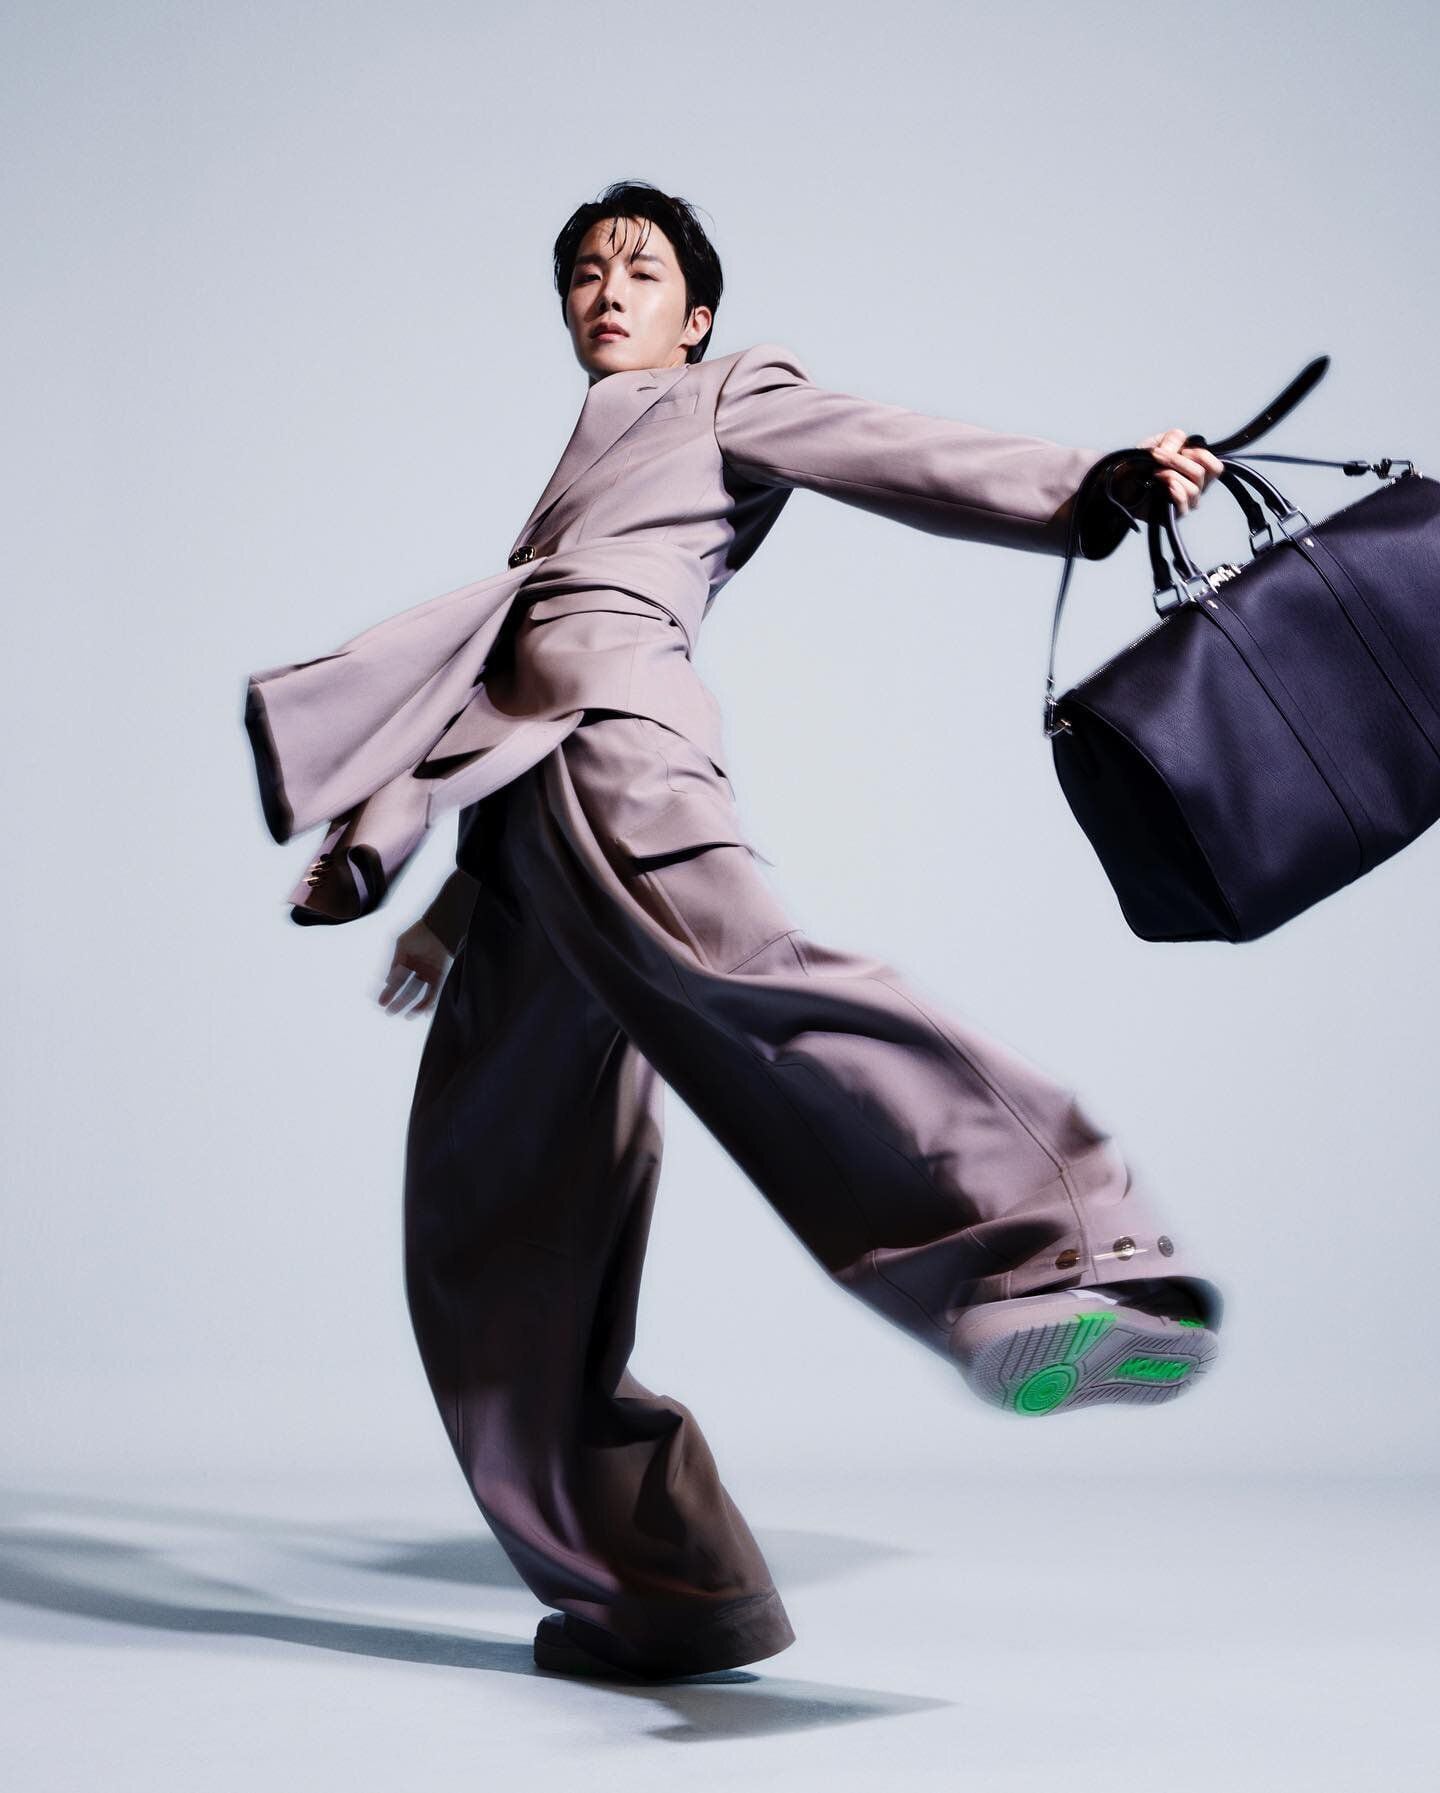 Louis Vuitton Travel Bag Costume For Women